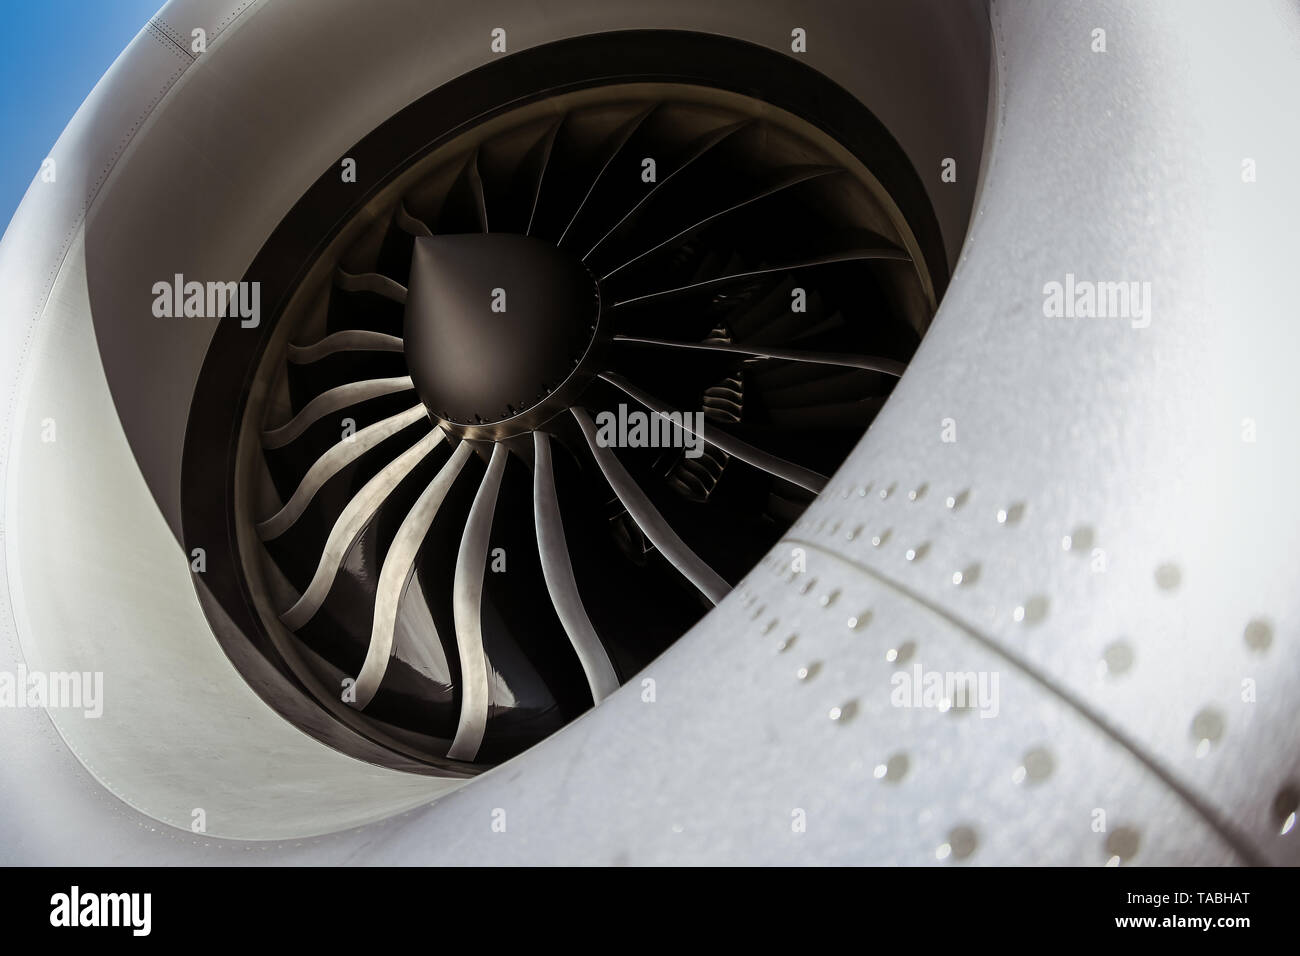 Dreamliner, 787, 787-800, turbine, airplane, fanblade, spinner. Stock Photo